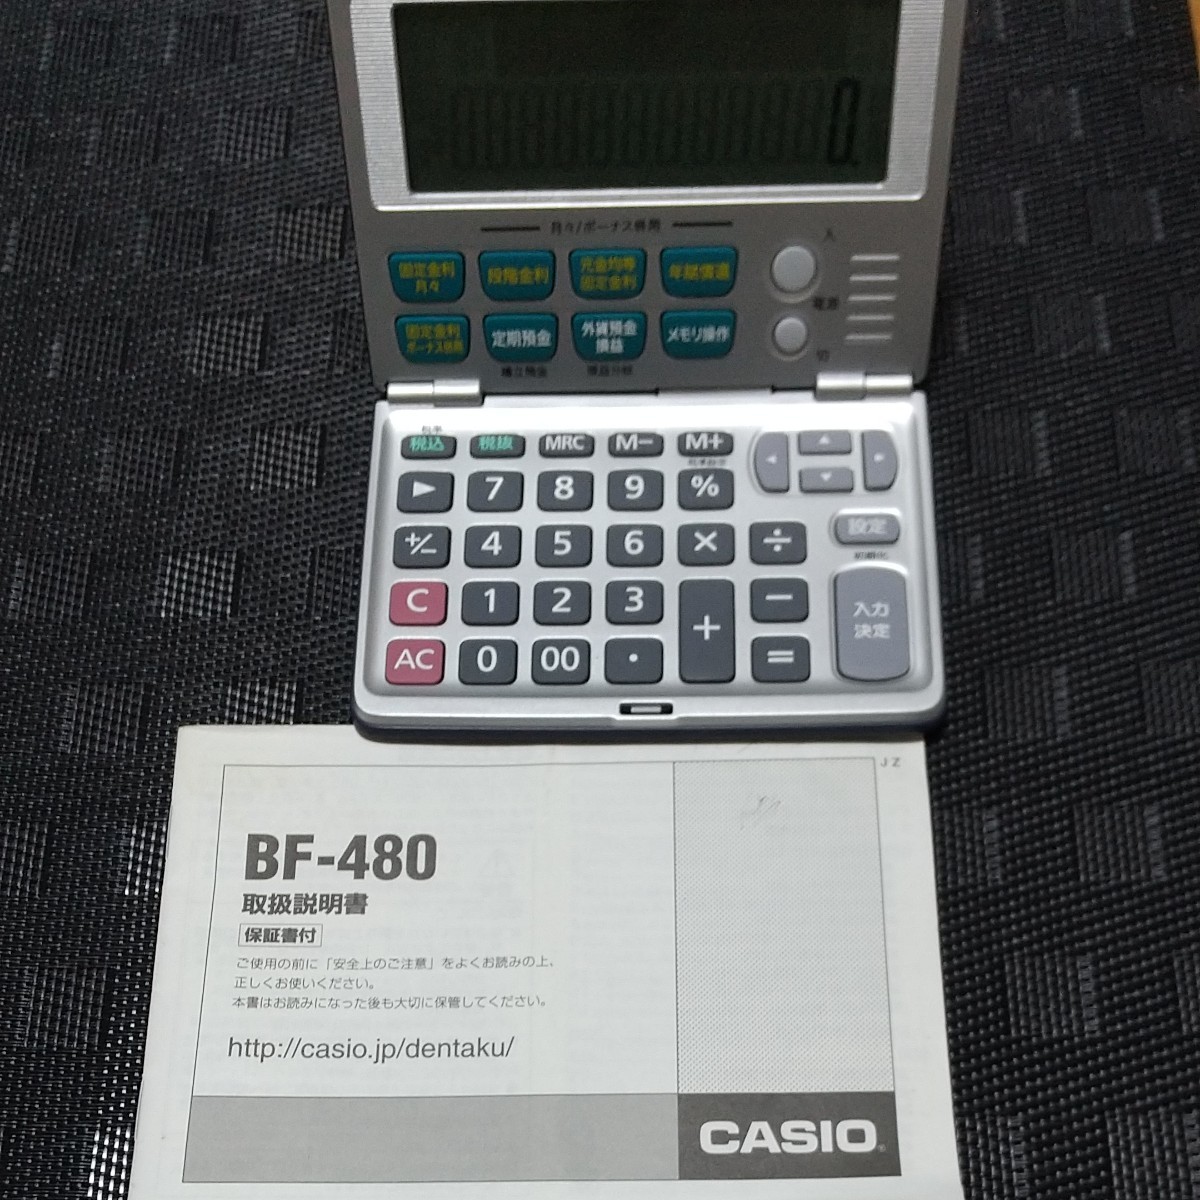 CASIO 計算機 ローン電卓 BF-480 説明書付き